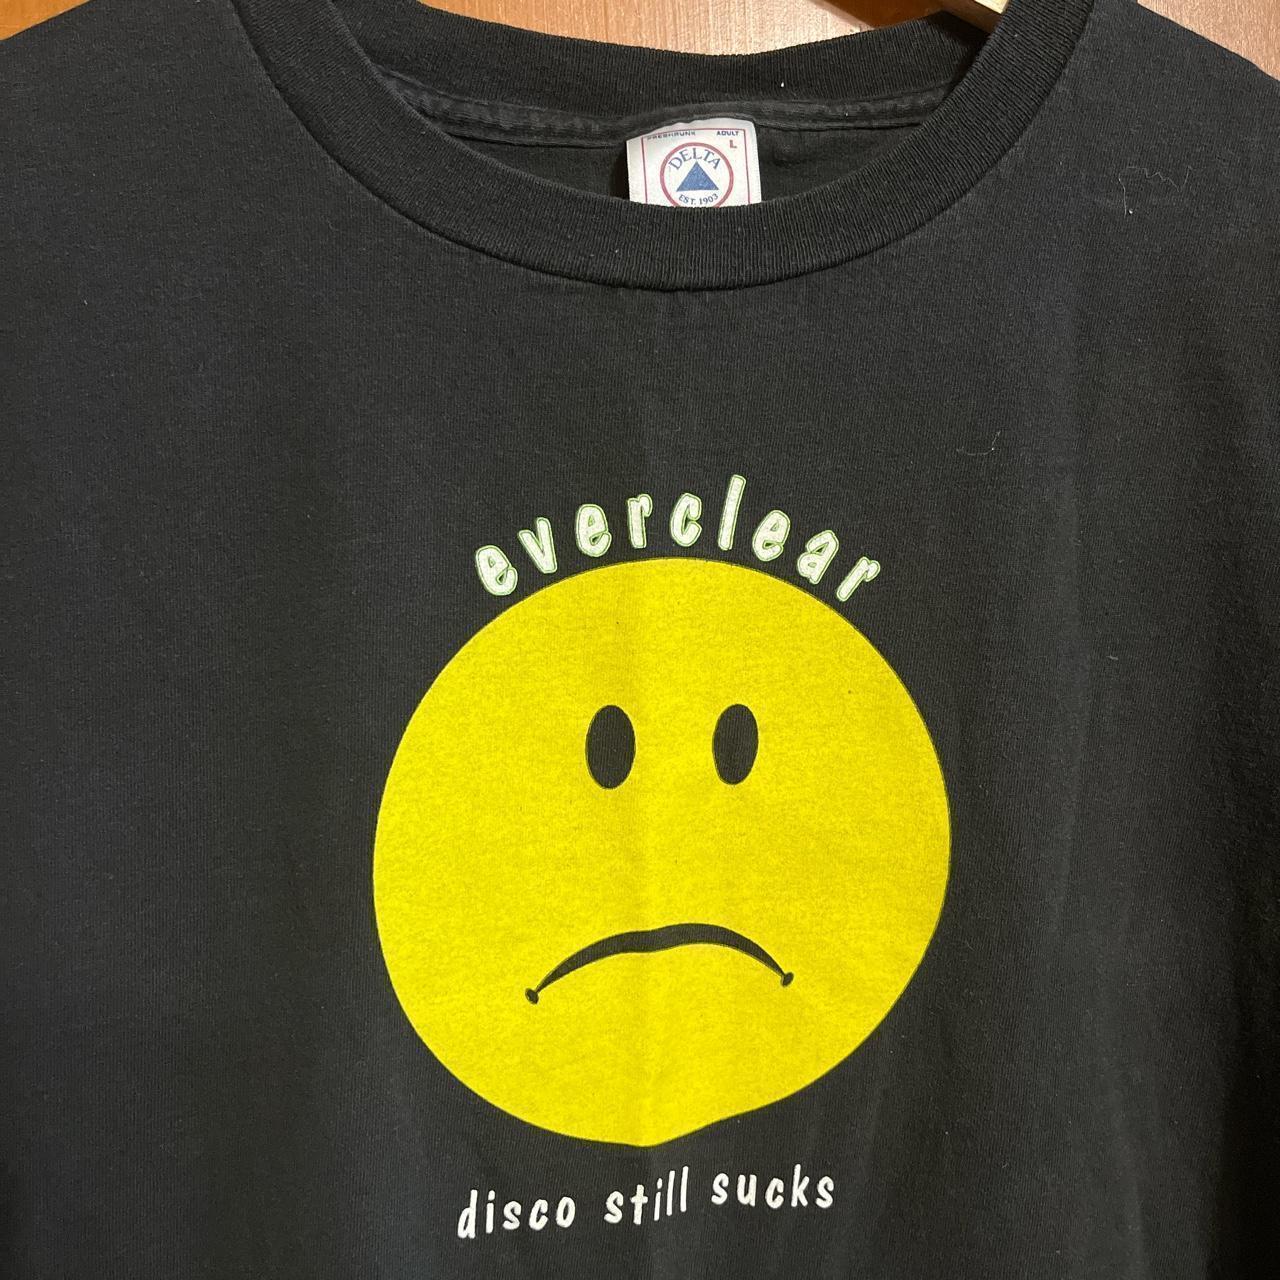 Los Doyers S/S Napbutter Shirt – Napbutter Records